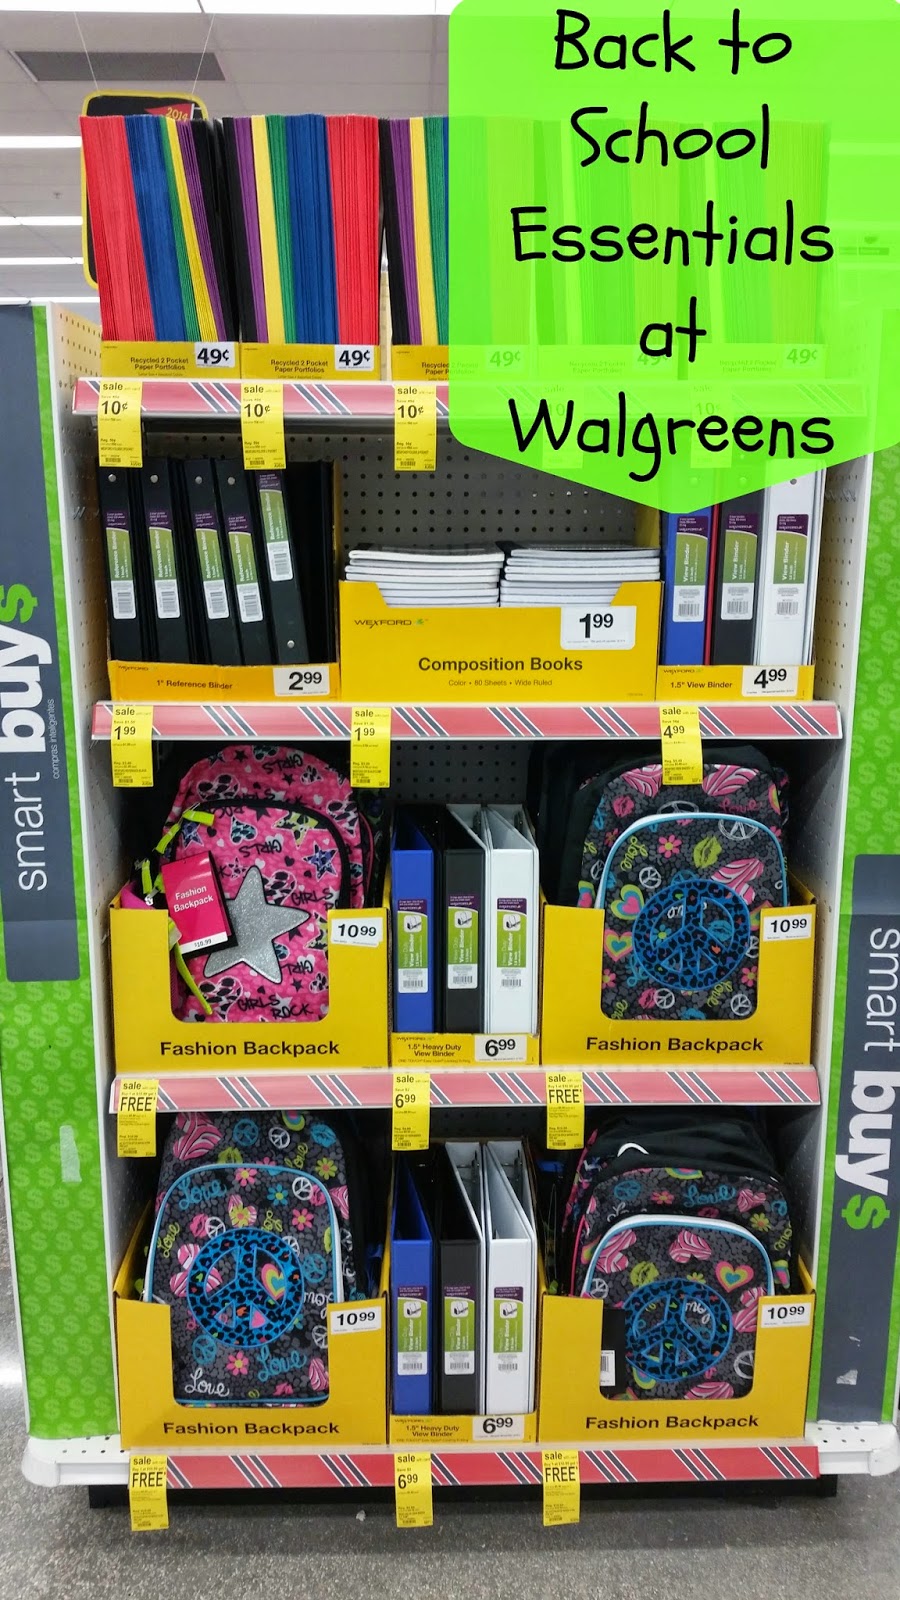 Back to School Essentials available at Walgreens #WalgreensLatino #shop